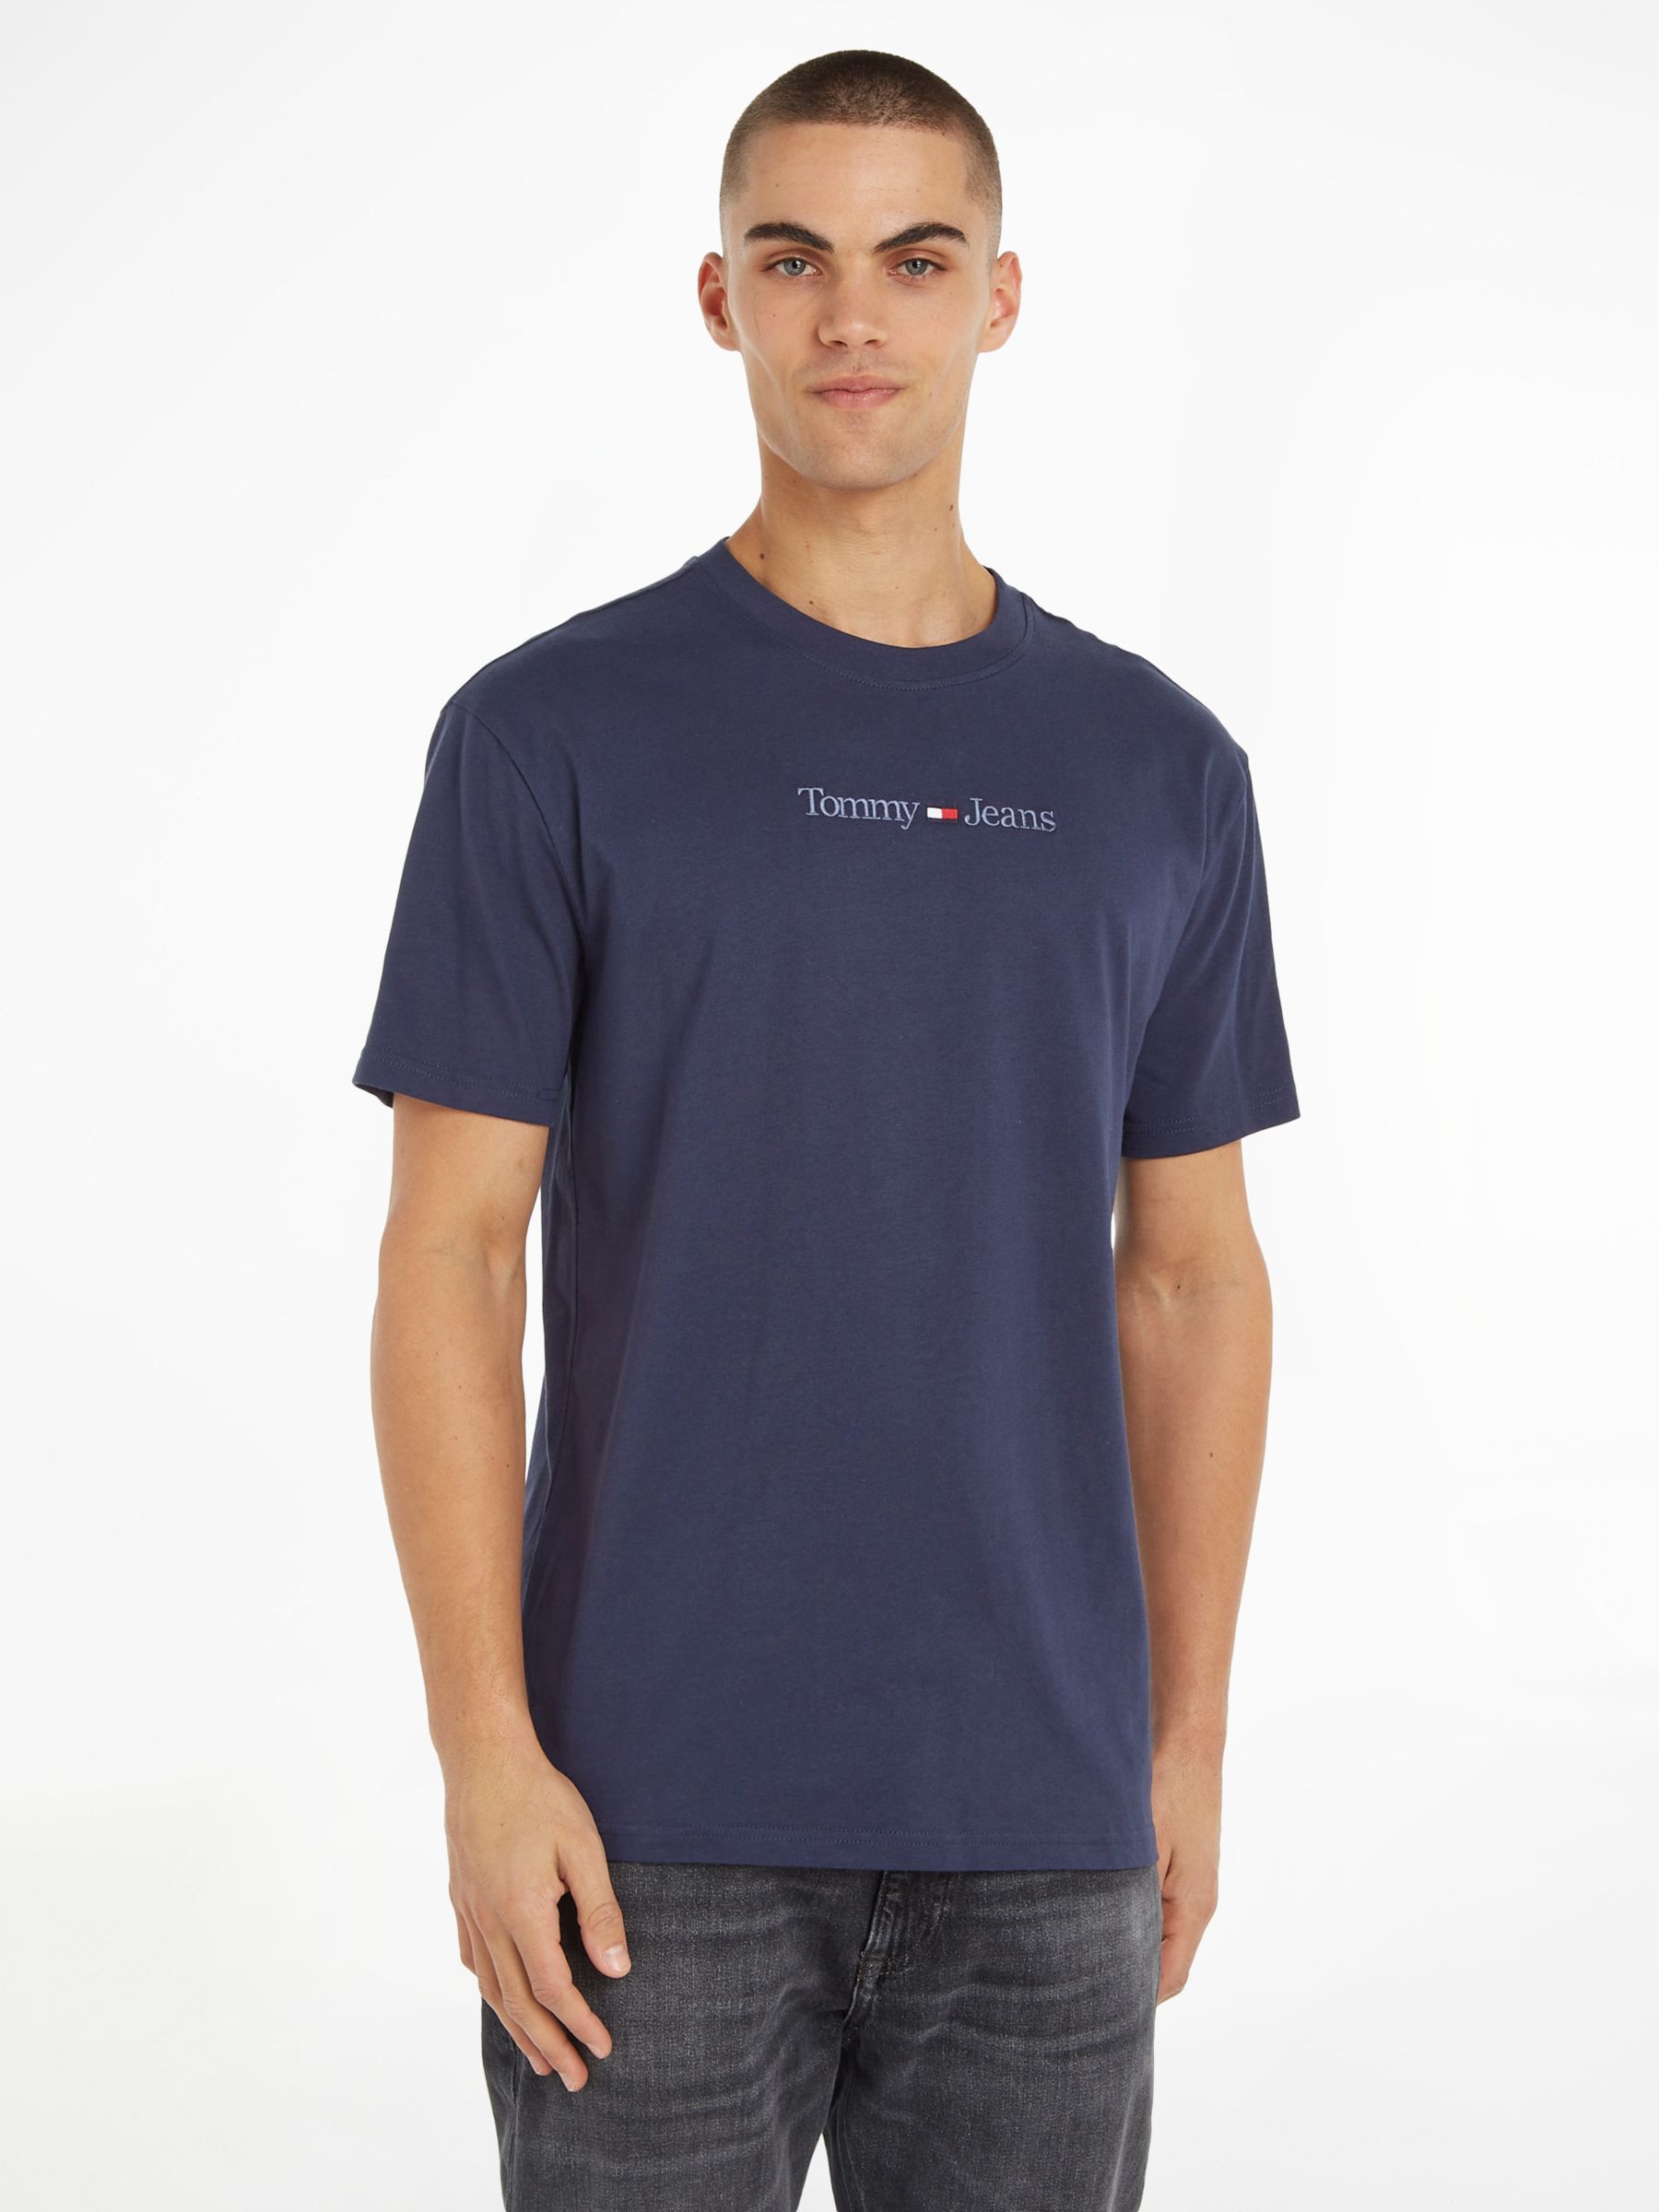 Tommy Jeans Logo T-Shirt, Twilight Navy At John Lewis & Partners